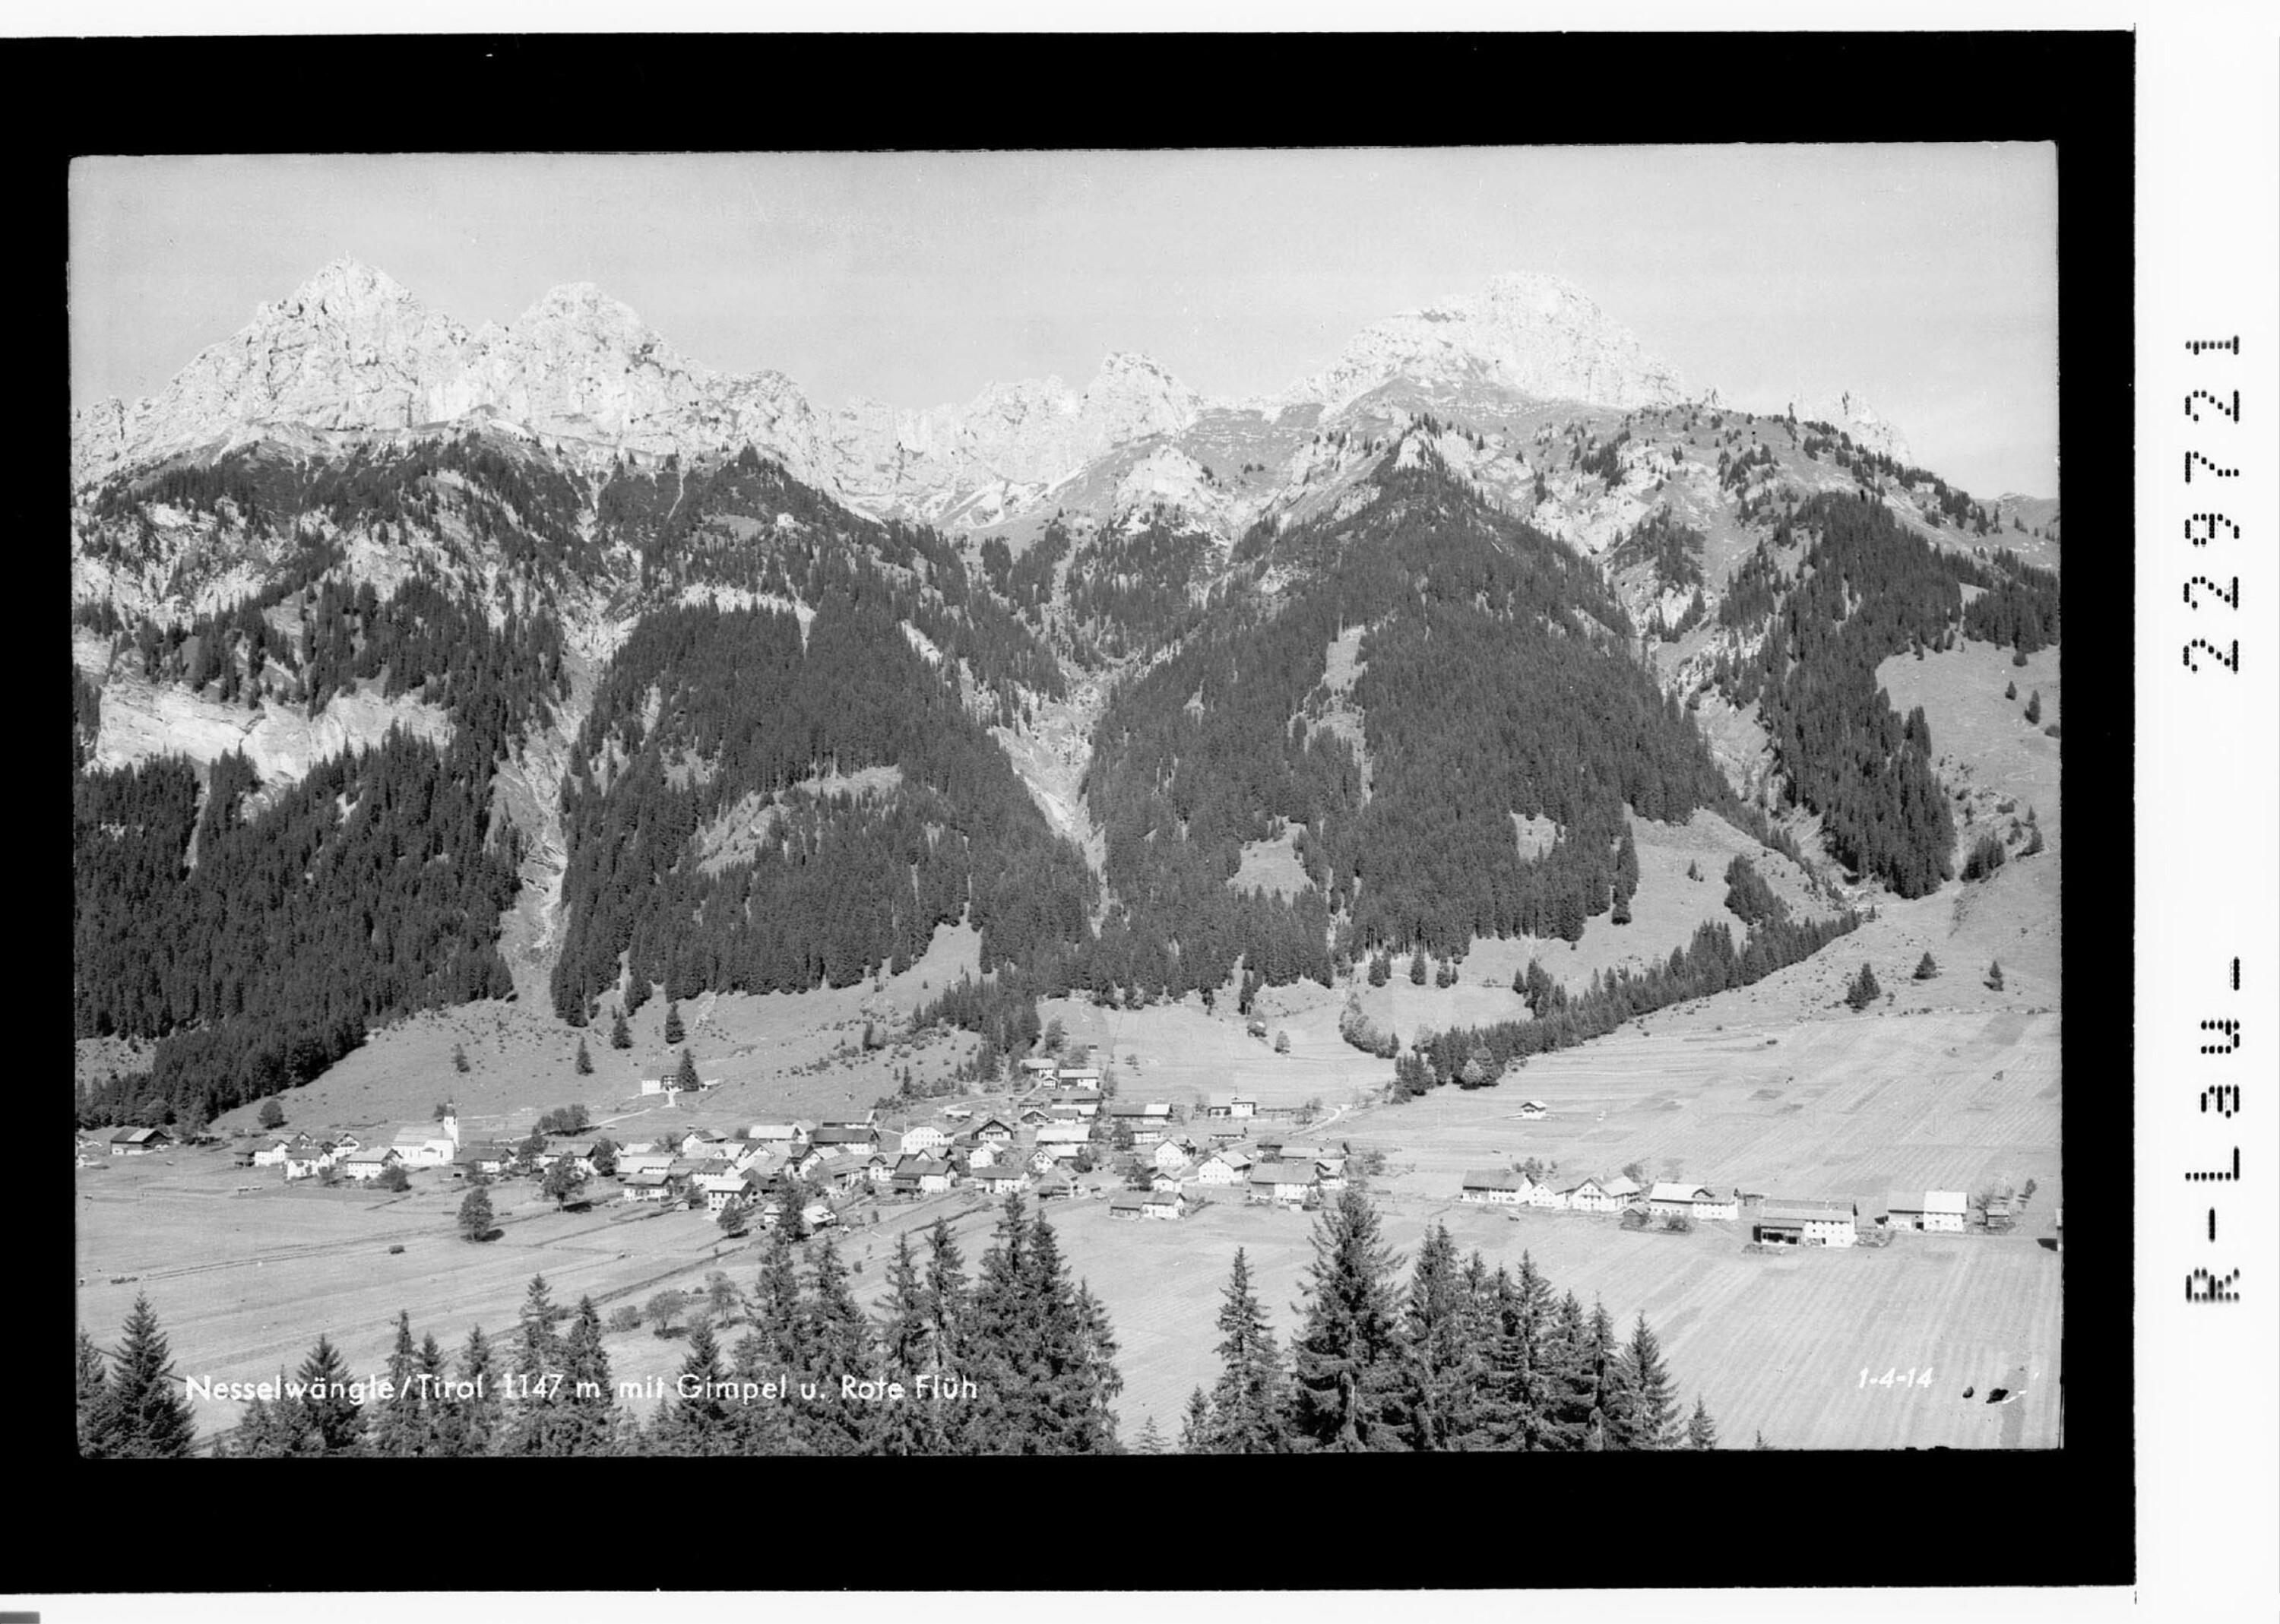 Nesselwängle / Tirol 1147 m mit Gimpel und Rote Flüh></div>


    <hr>
    <div class=